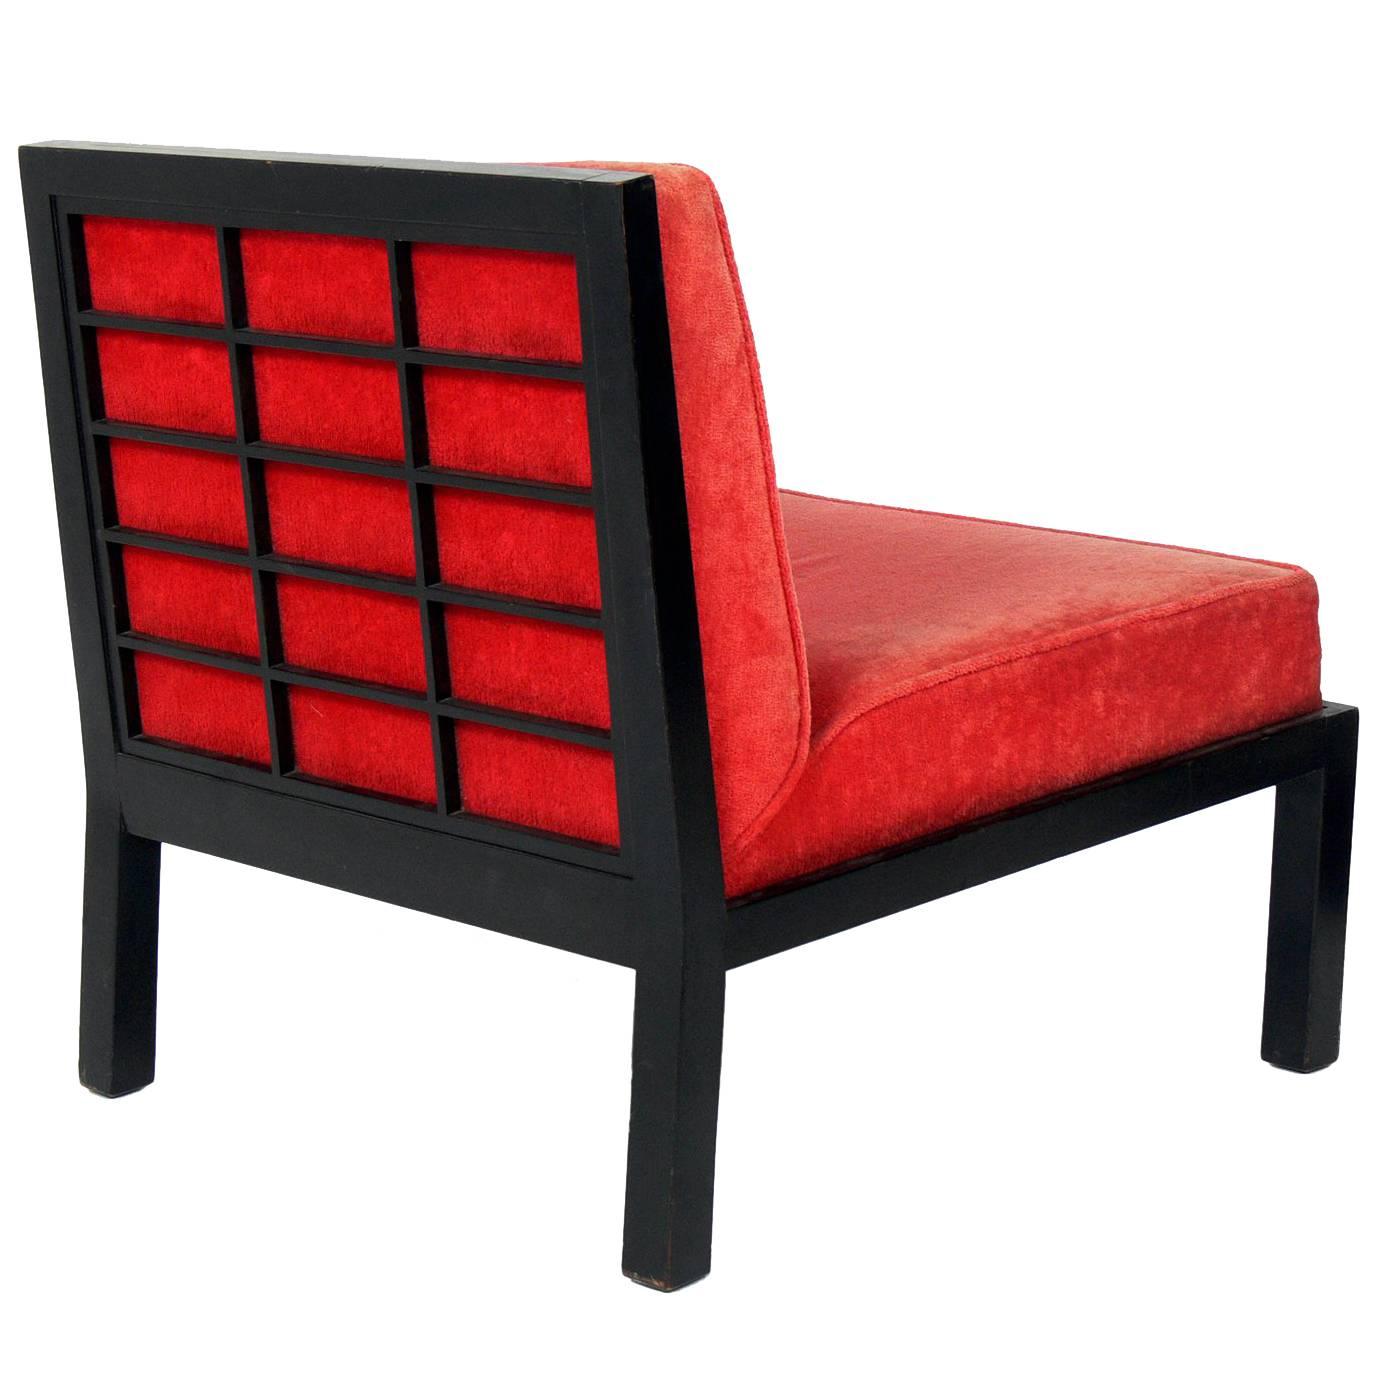 Asian Inspired Slipper Chair Designed by Michael Taylor for Baker